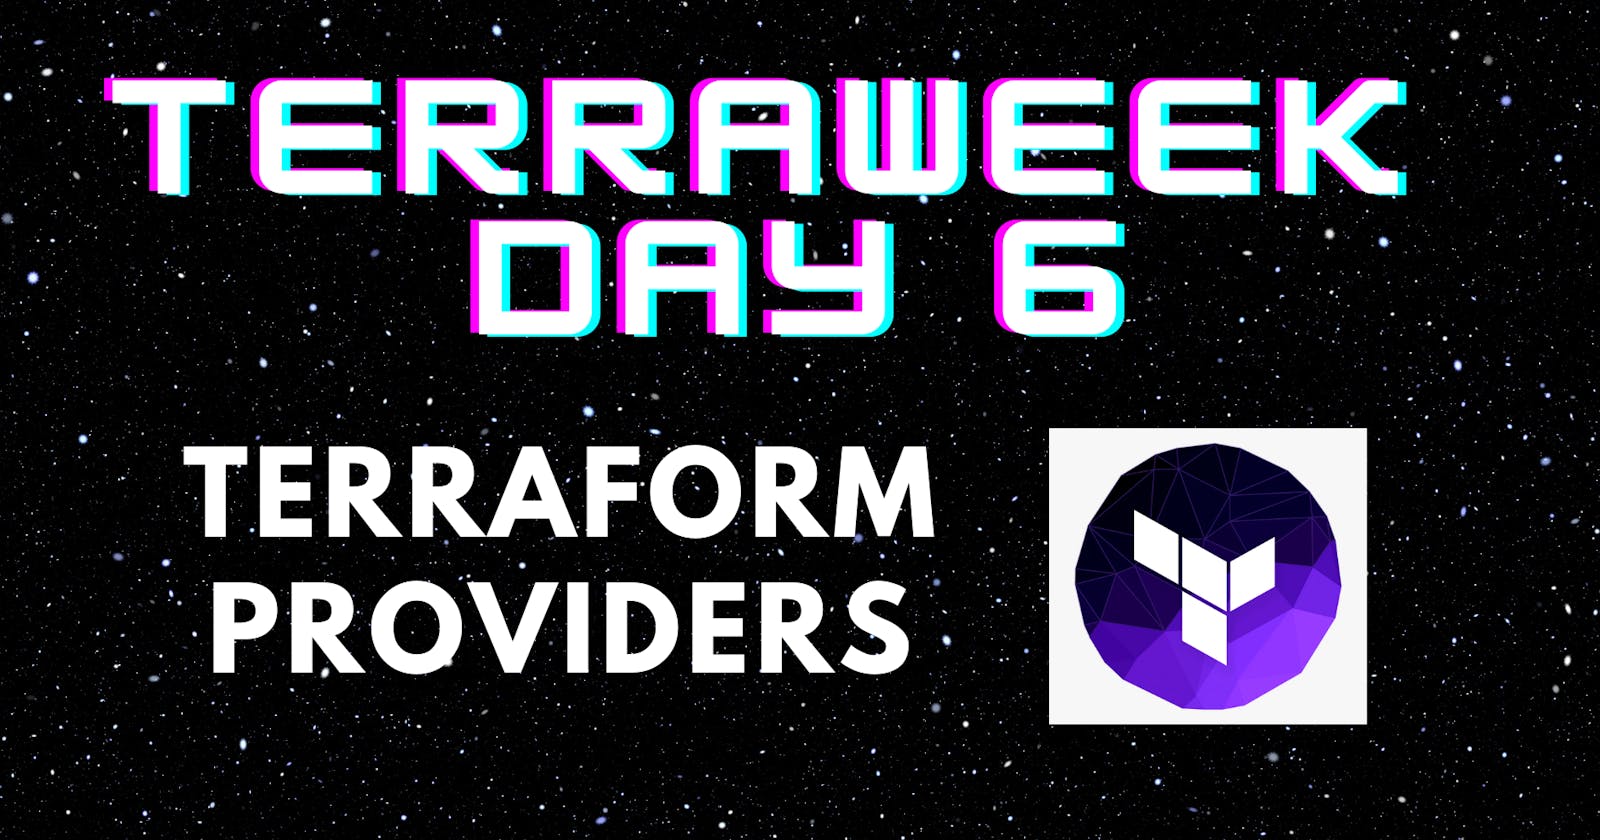 TerraWeek Day 6 : Terraform providers